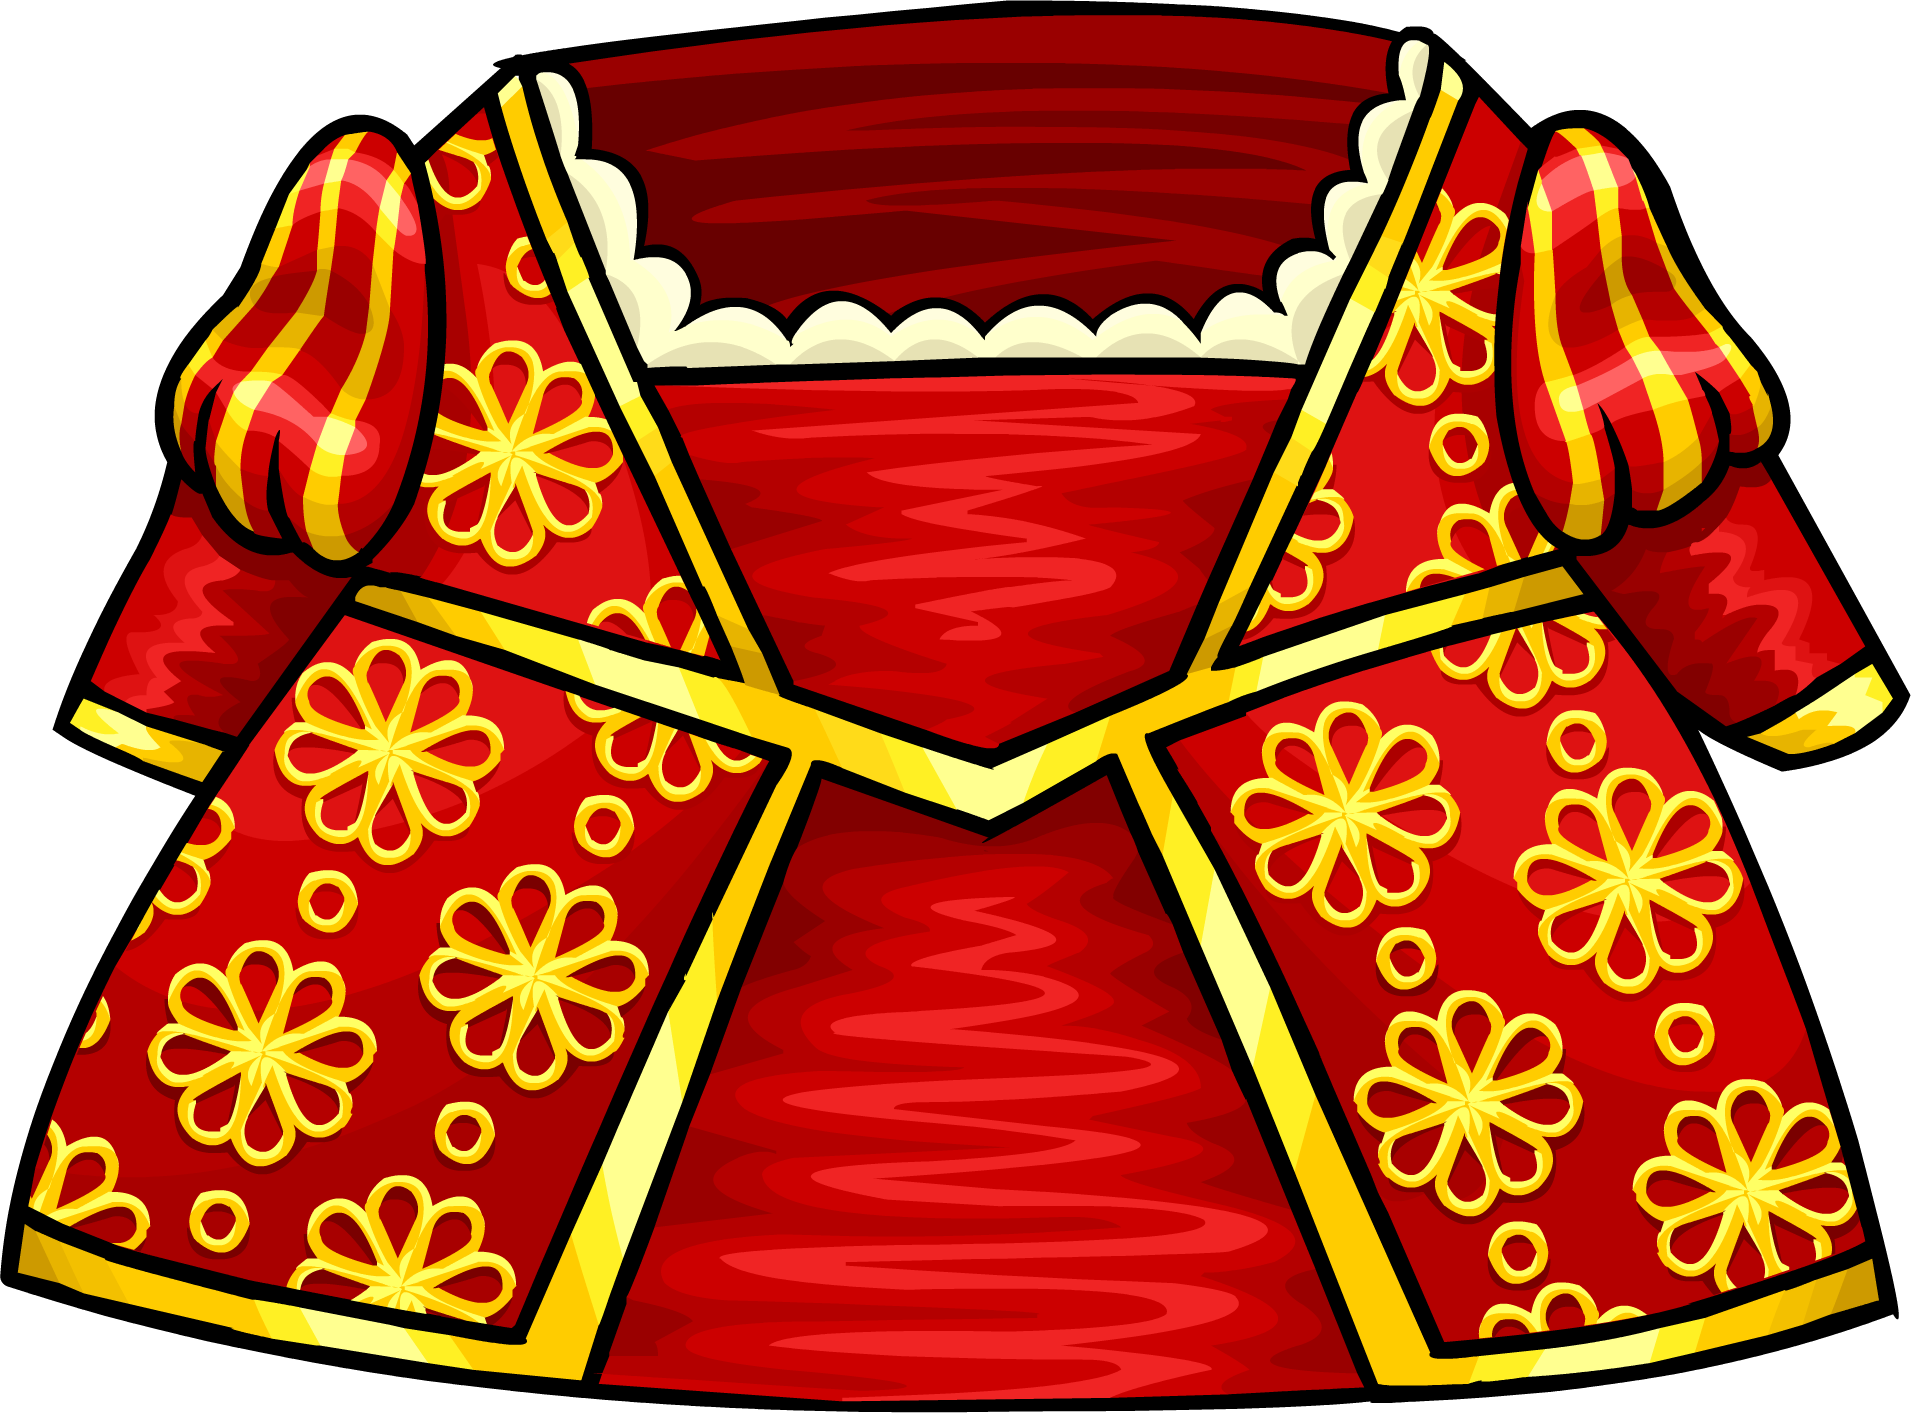 Red dress effect - Wikipedia